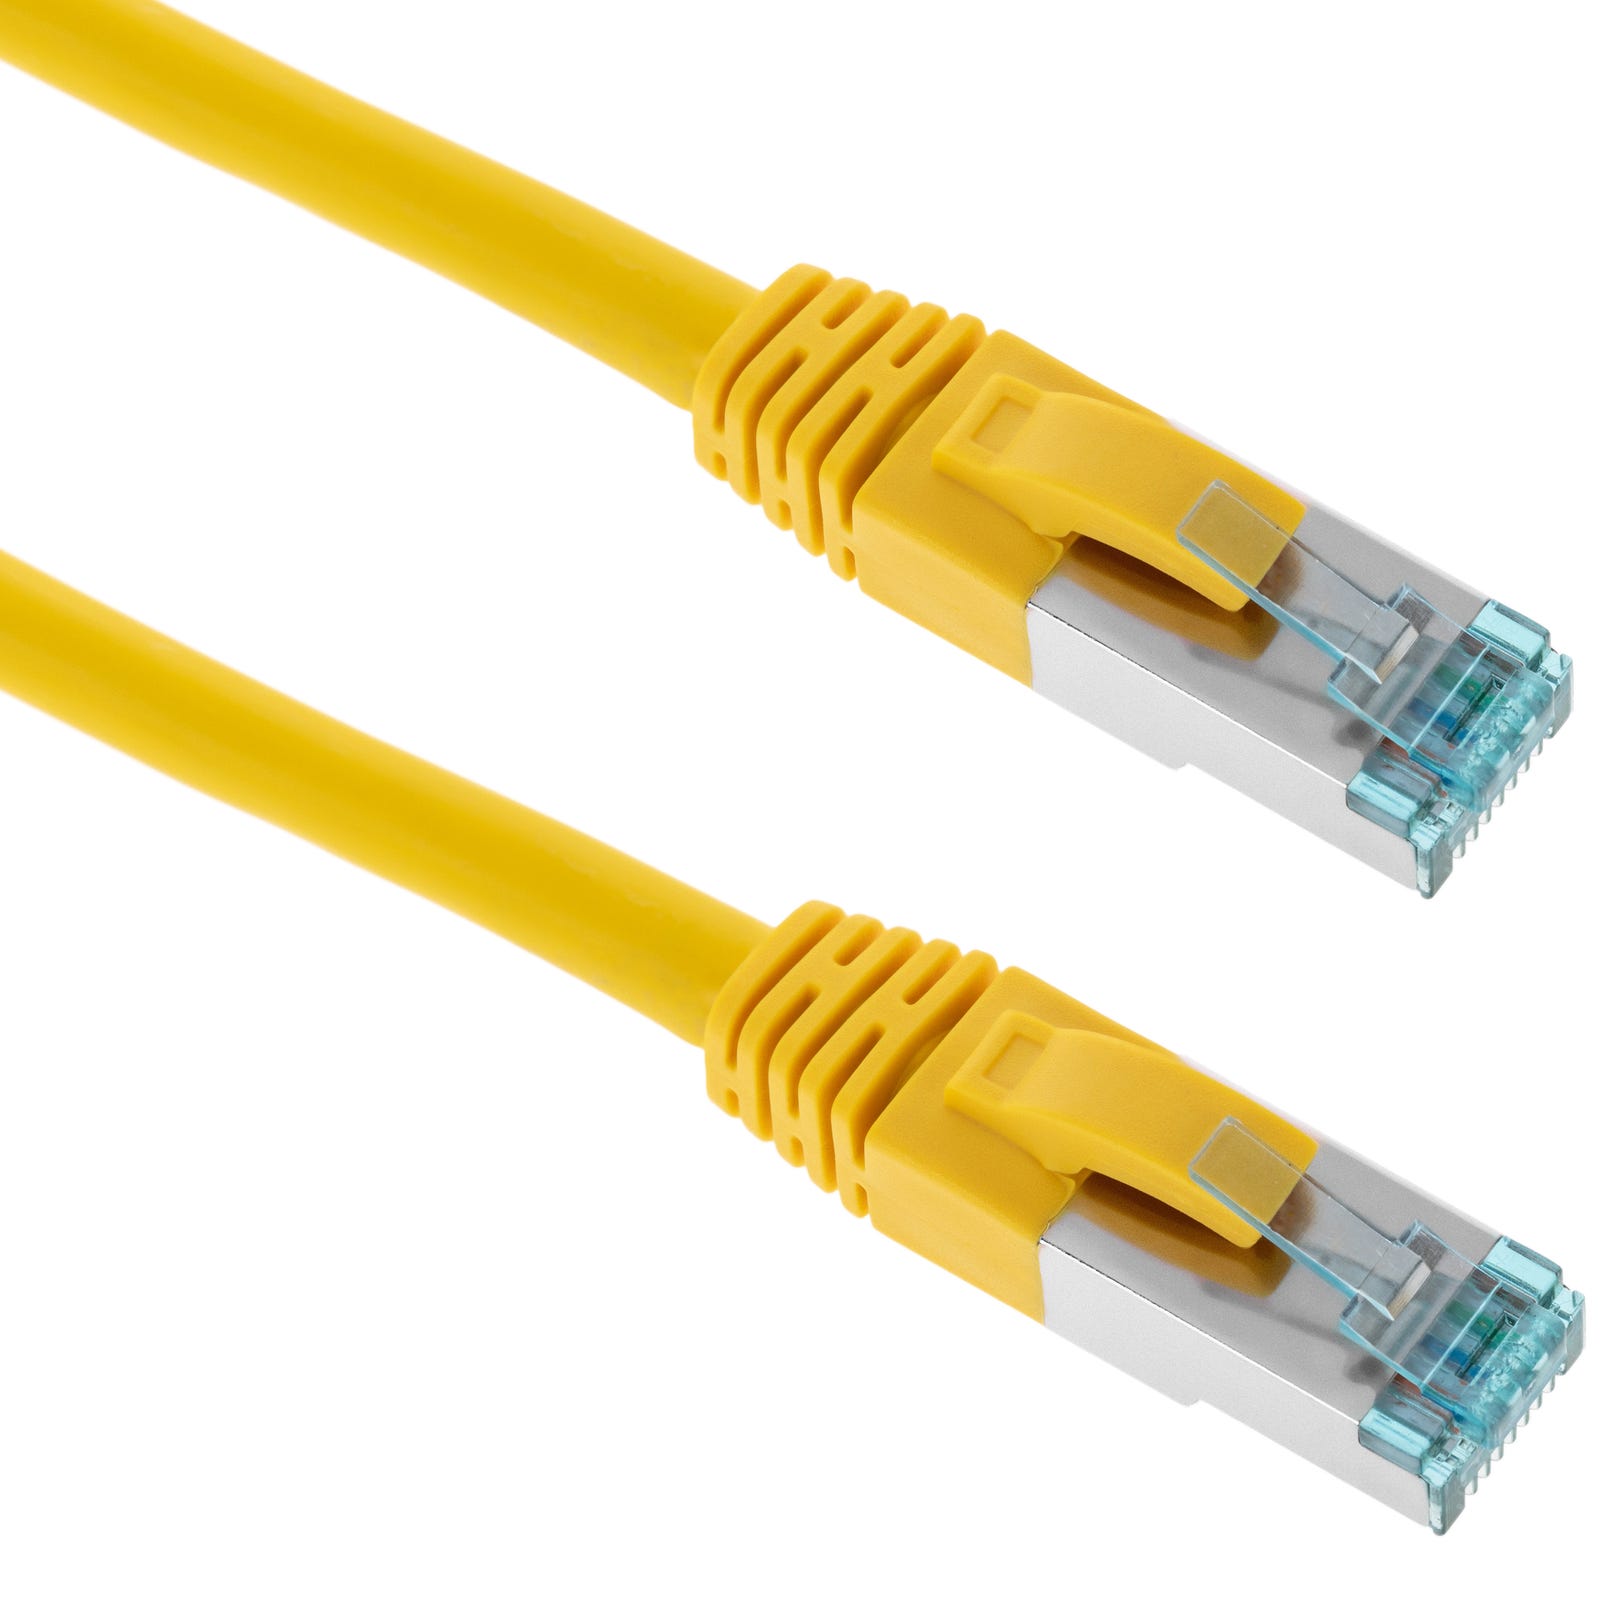 Cable de red ethernet 10 metros LAN SFTP RJ45 Cat.7 blanco